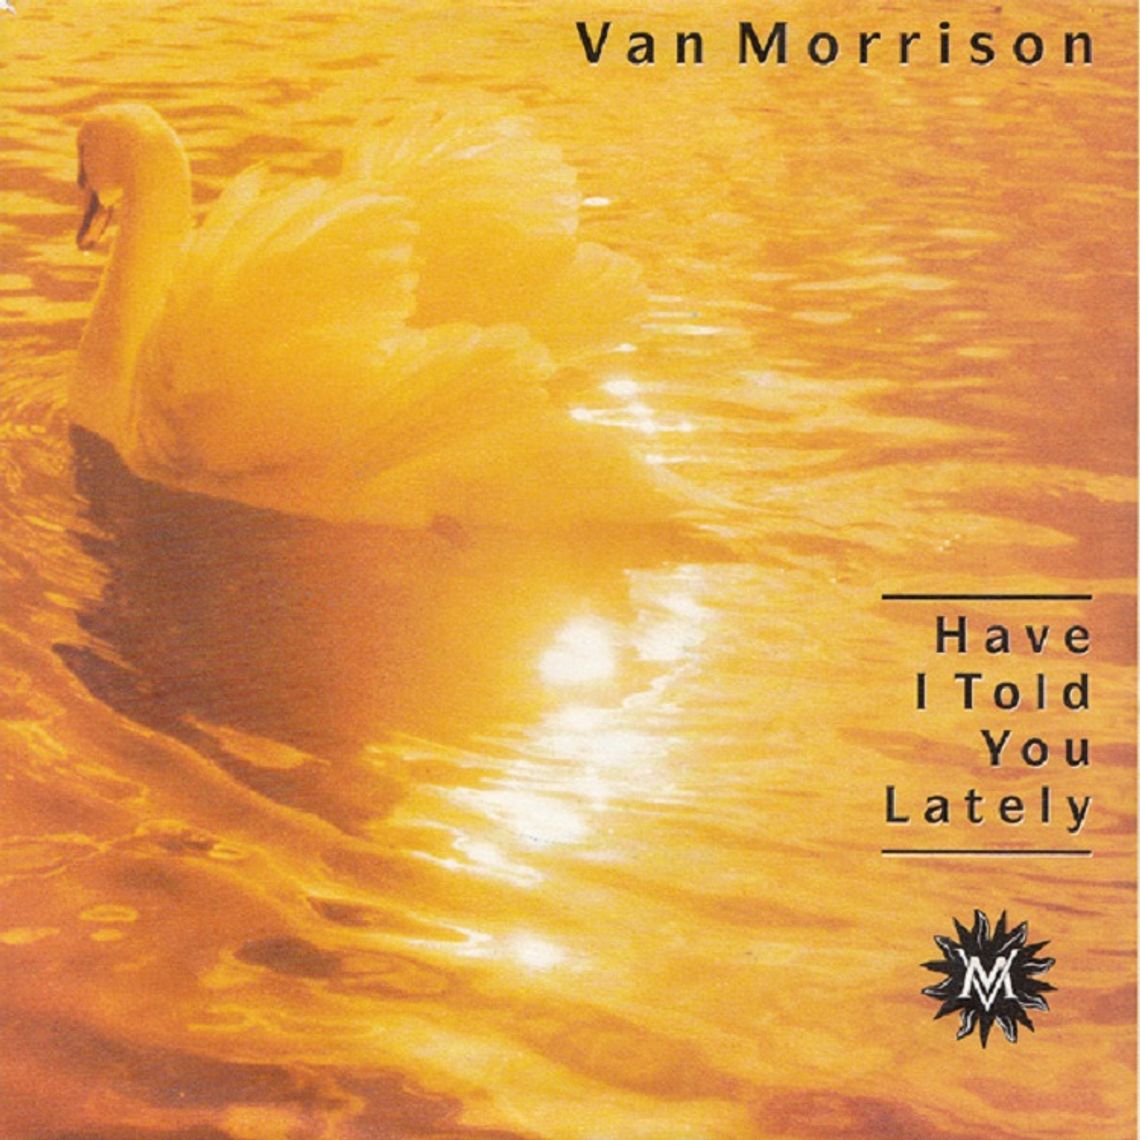 VAN MORRISON "Have I told you lately"